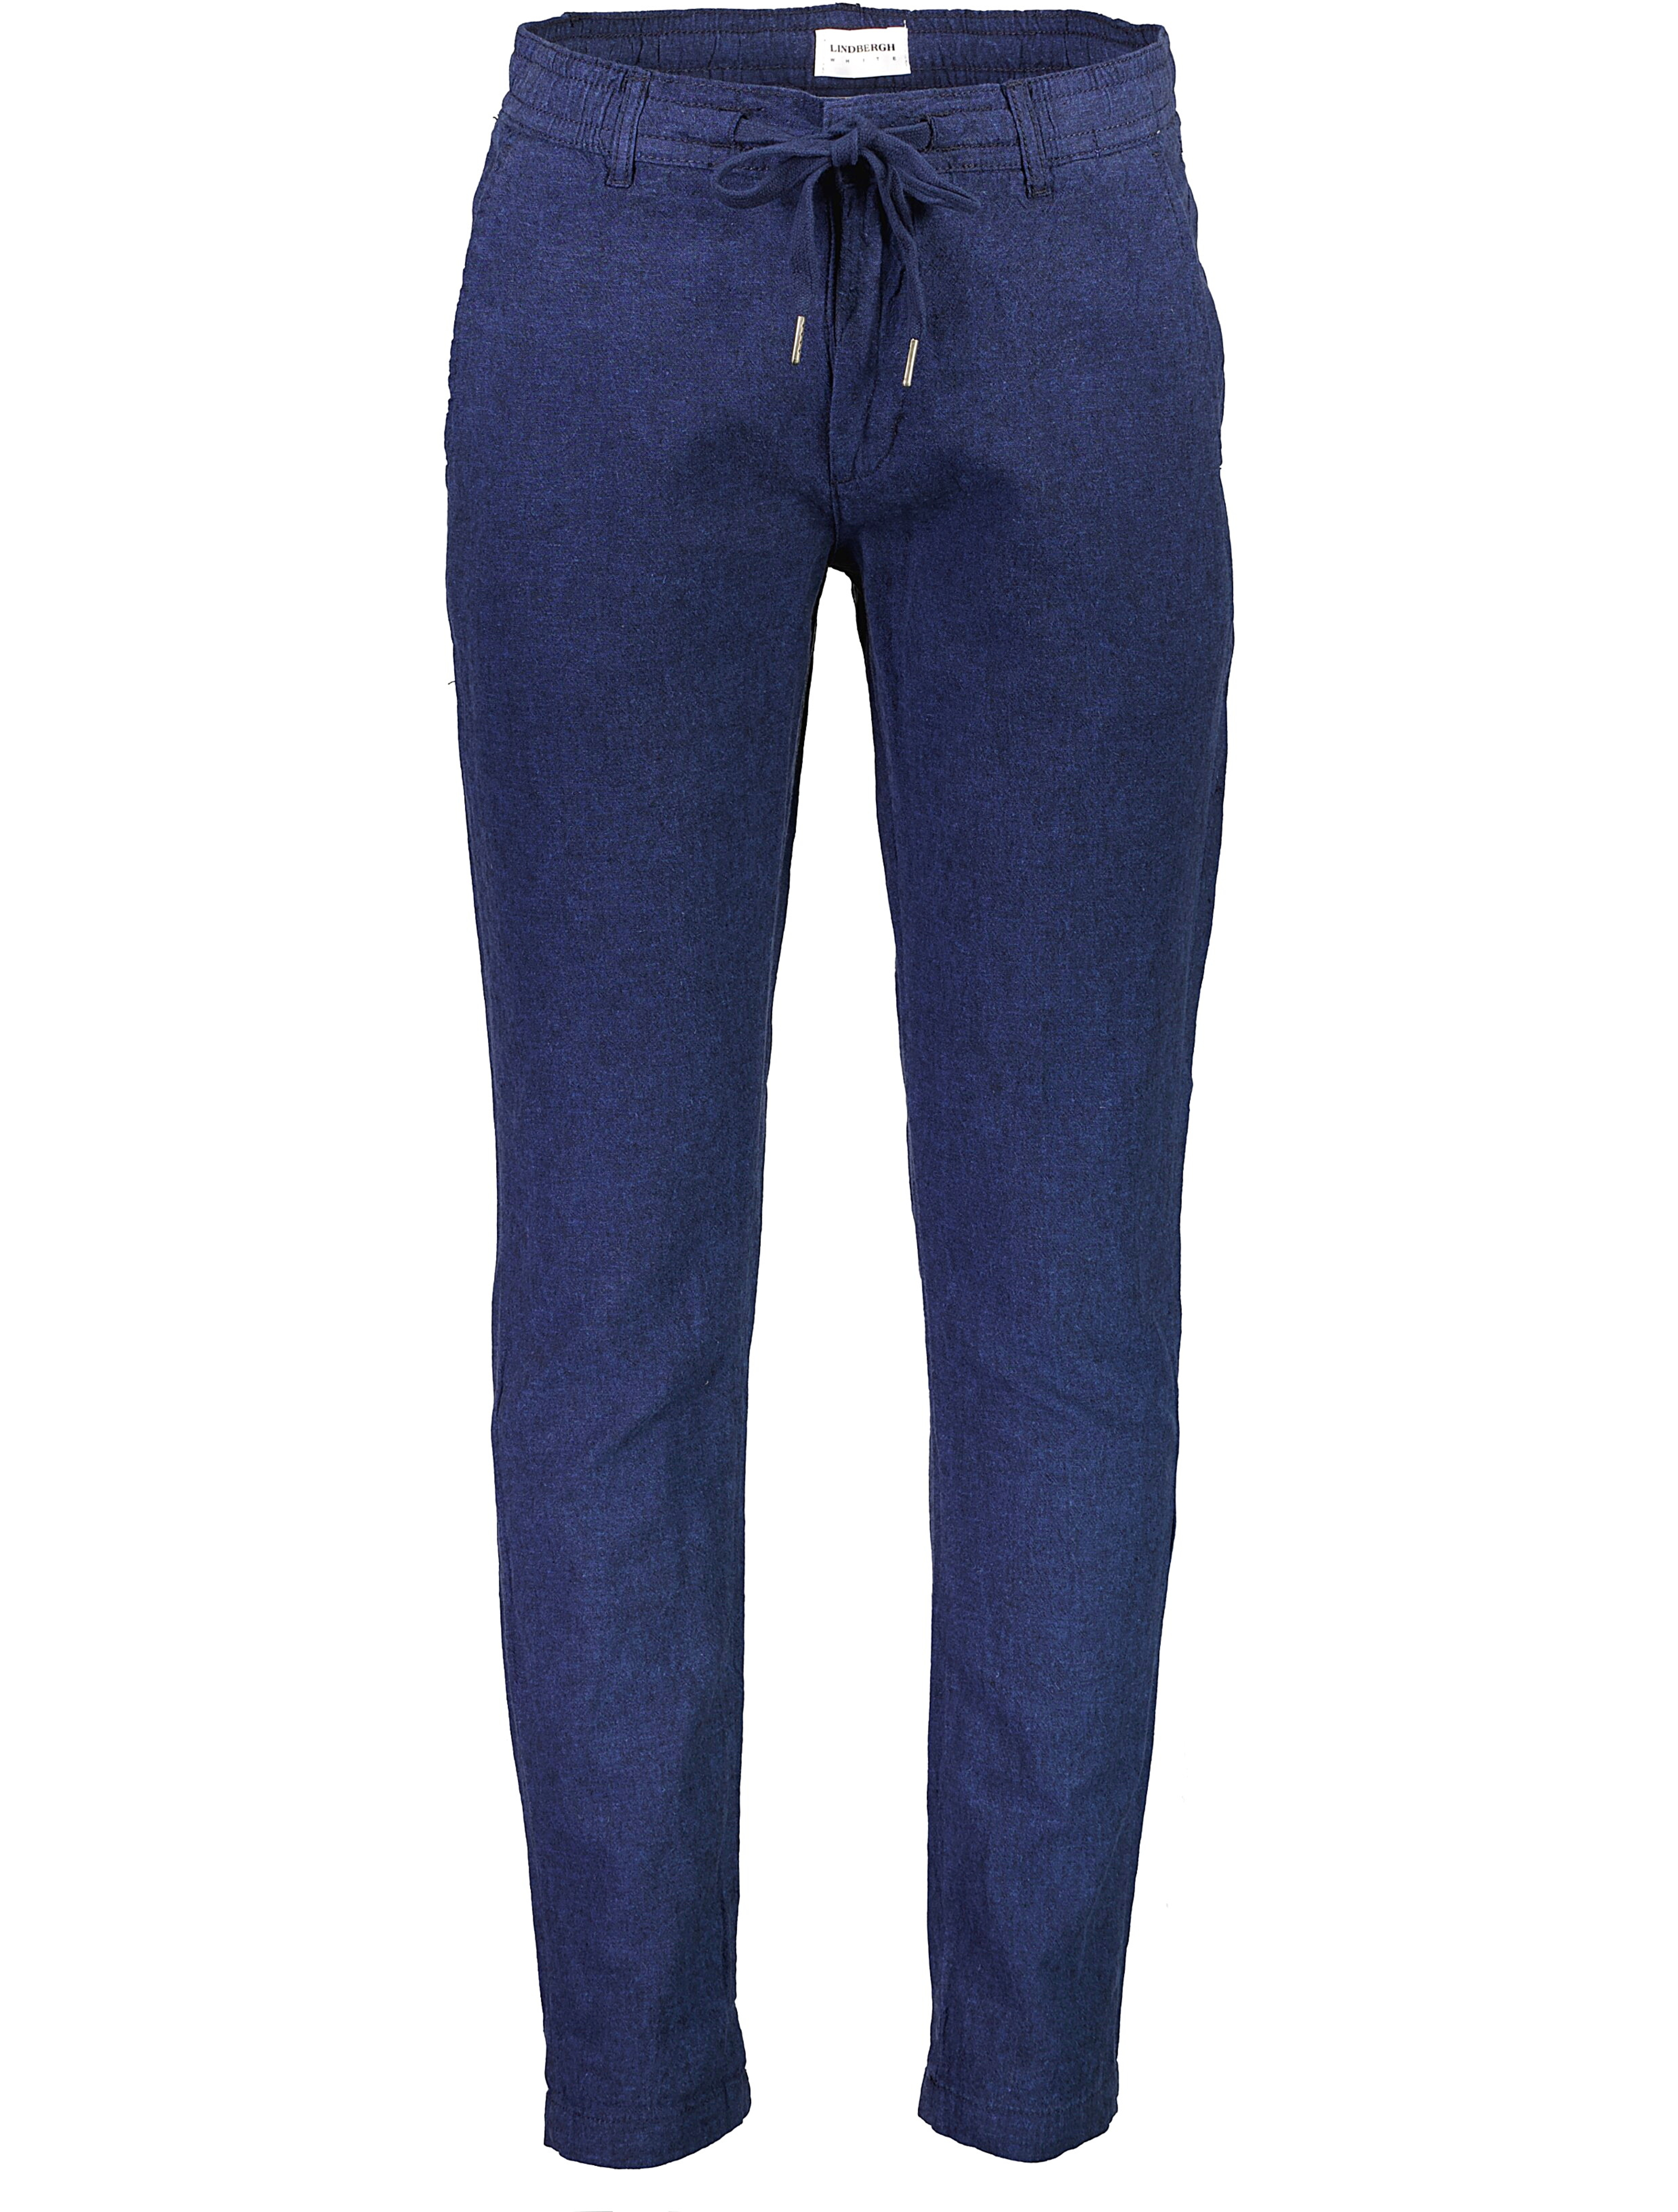 Lindbergh Linen pants blue / dk blue